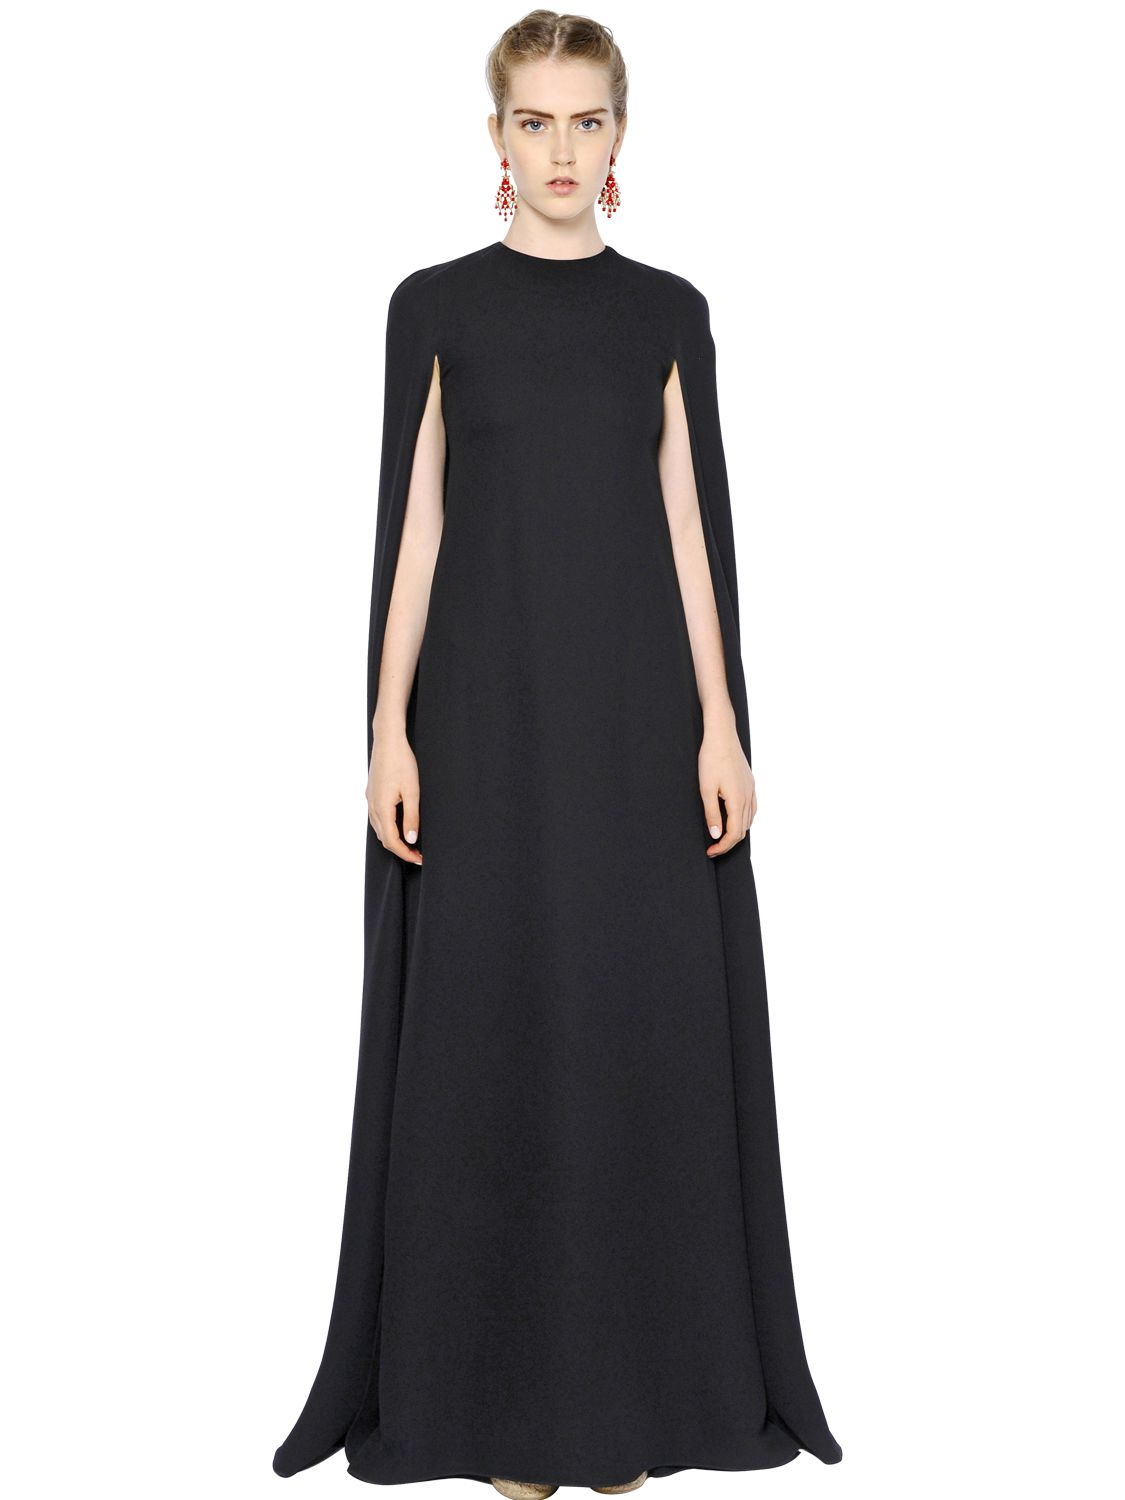 Lyst - Valentino Silk Cady Cape Style Dress in Black